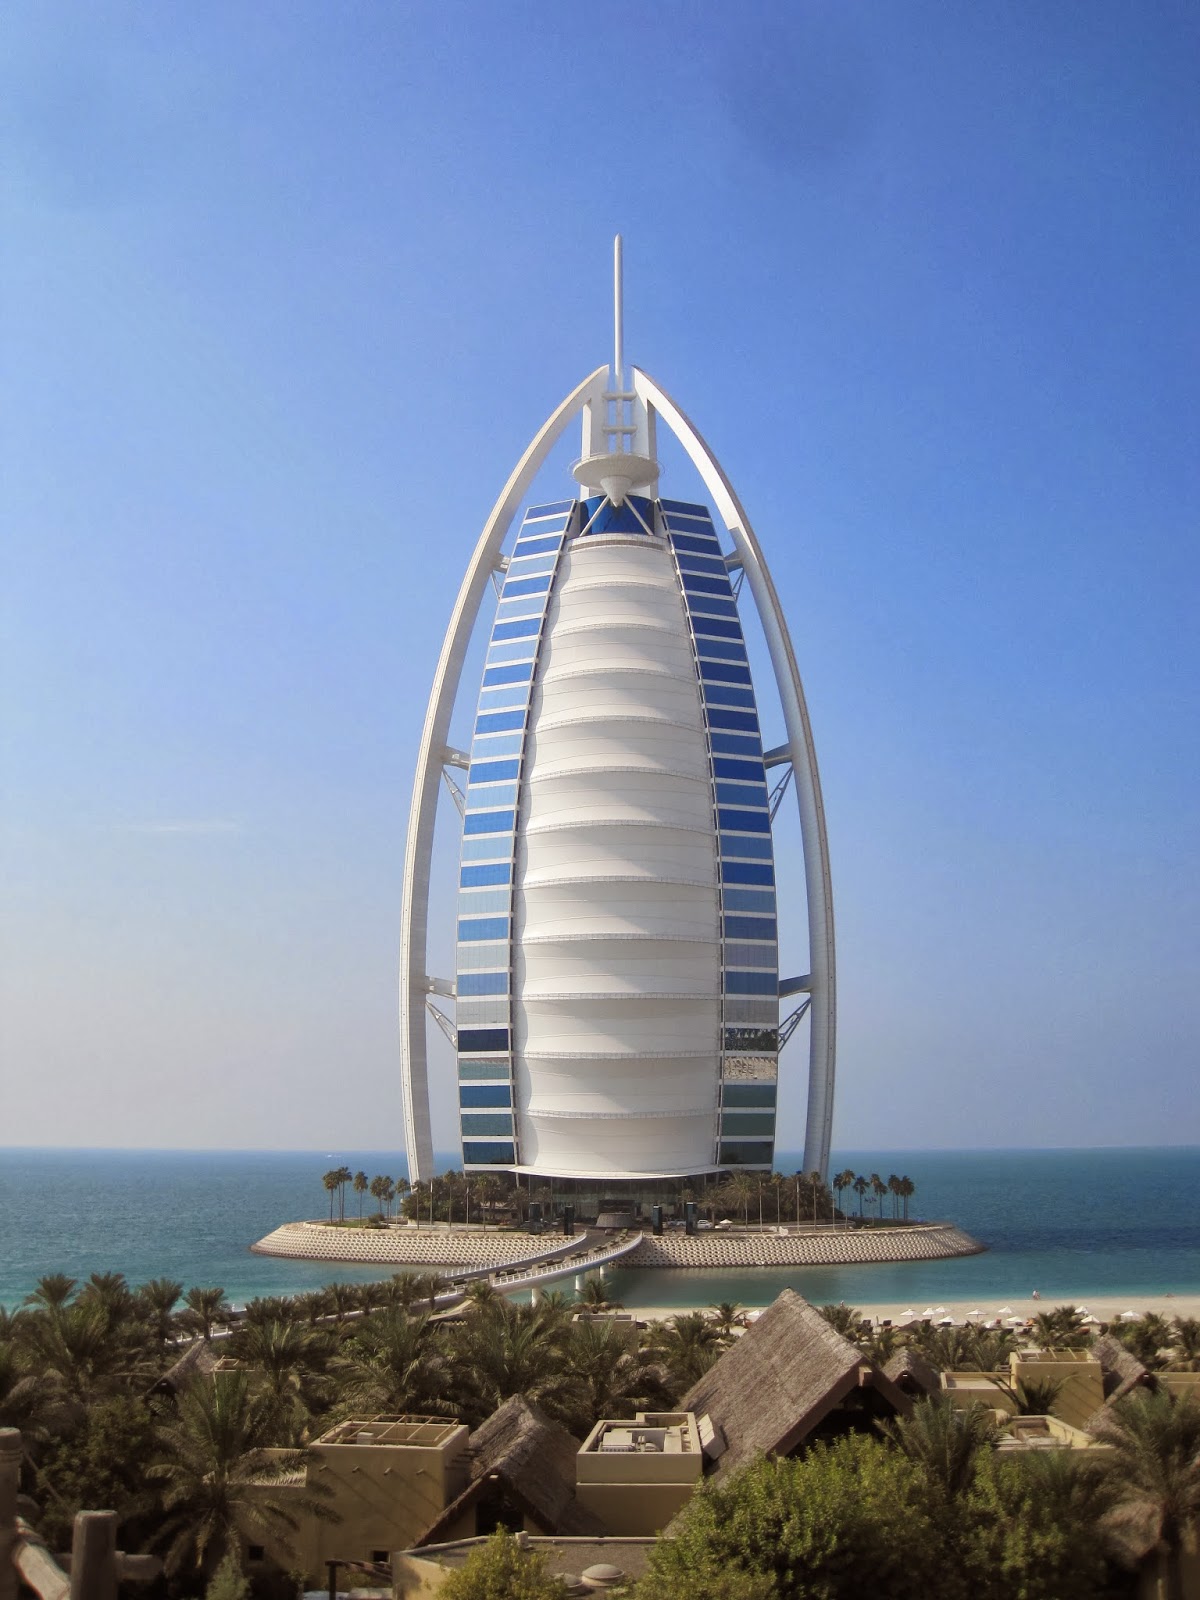 Abu Dhabi, Al Ain, Dubai: New Dubai Sights